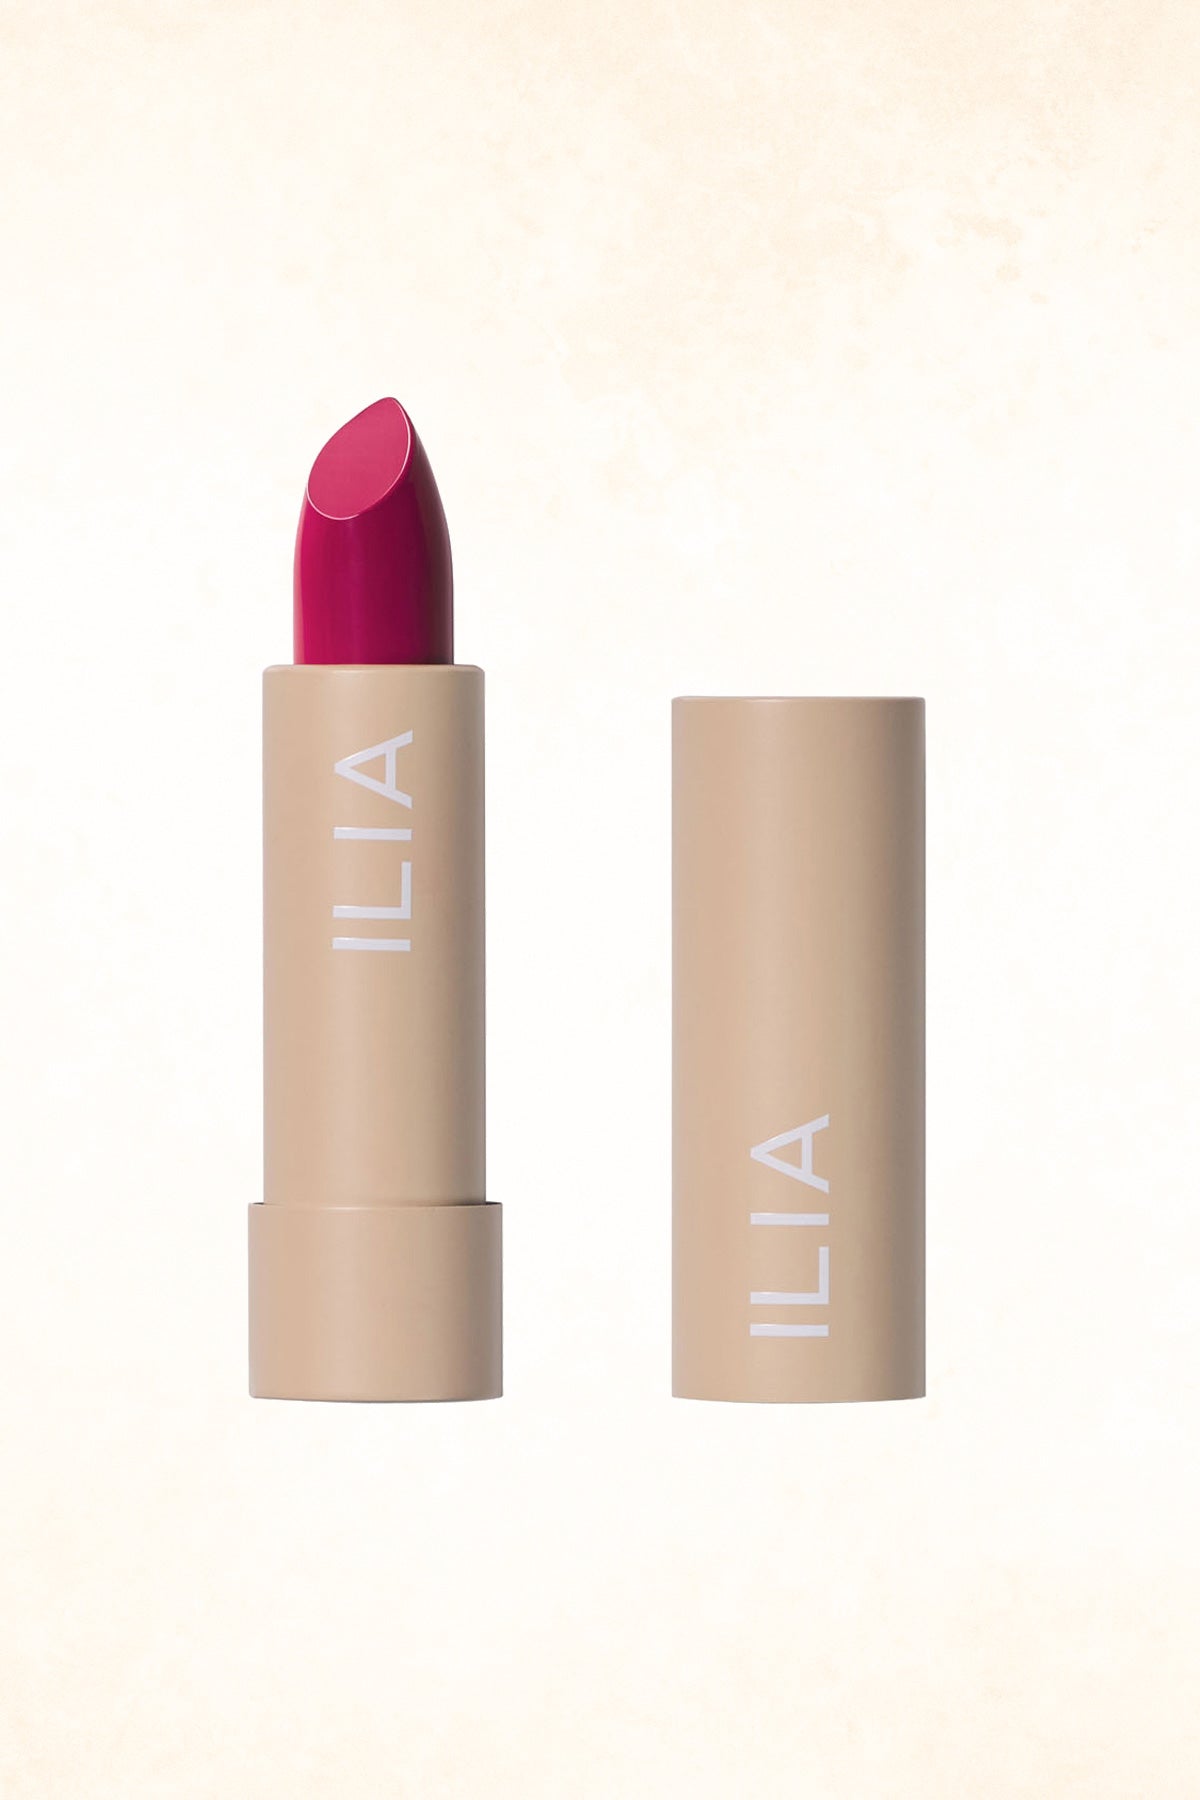 ILIA - Color Block High Impact Lipstick - Knockout - 4 g